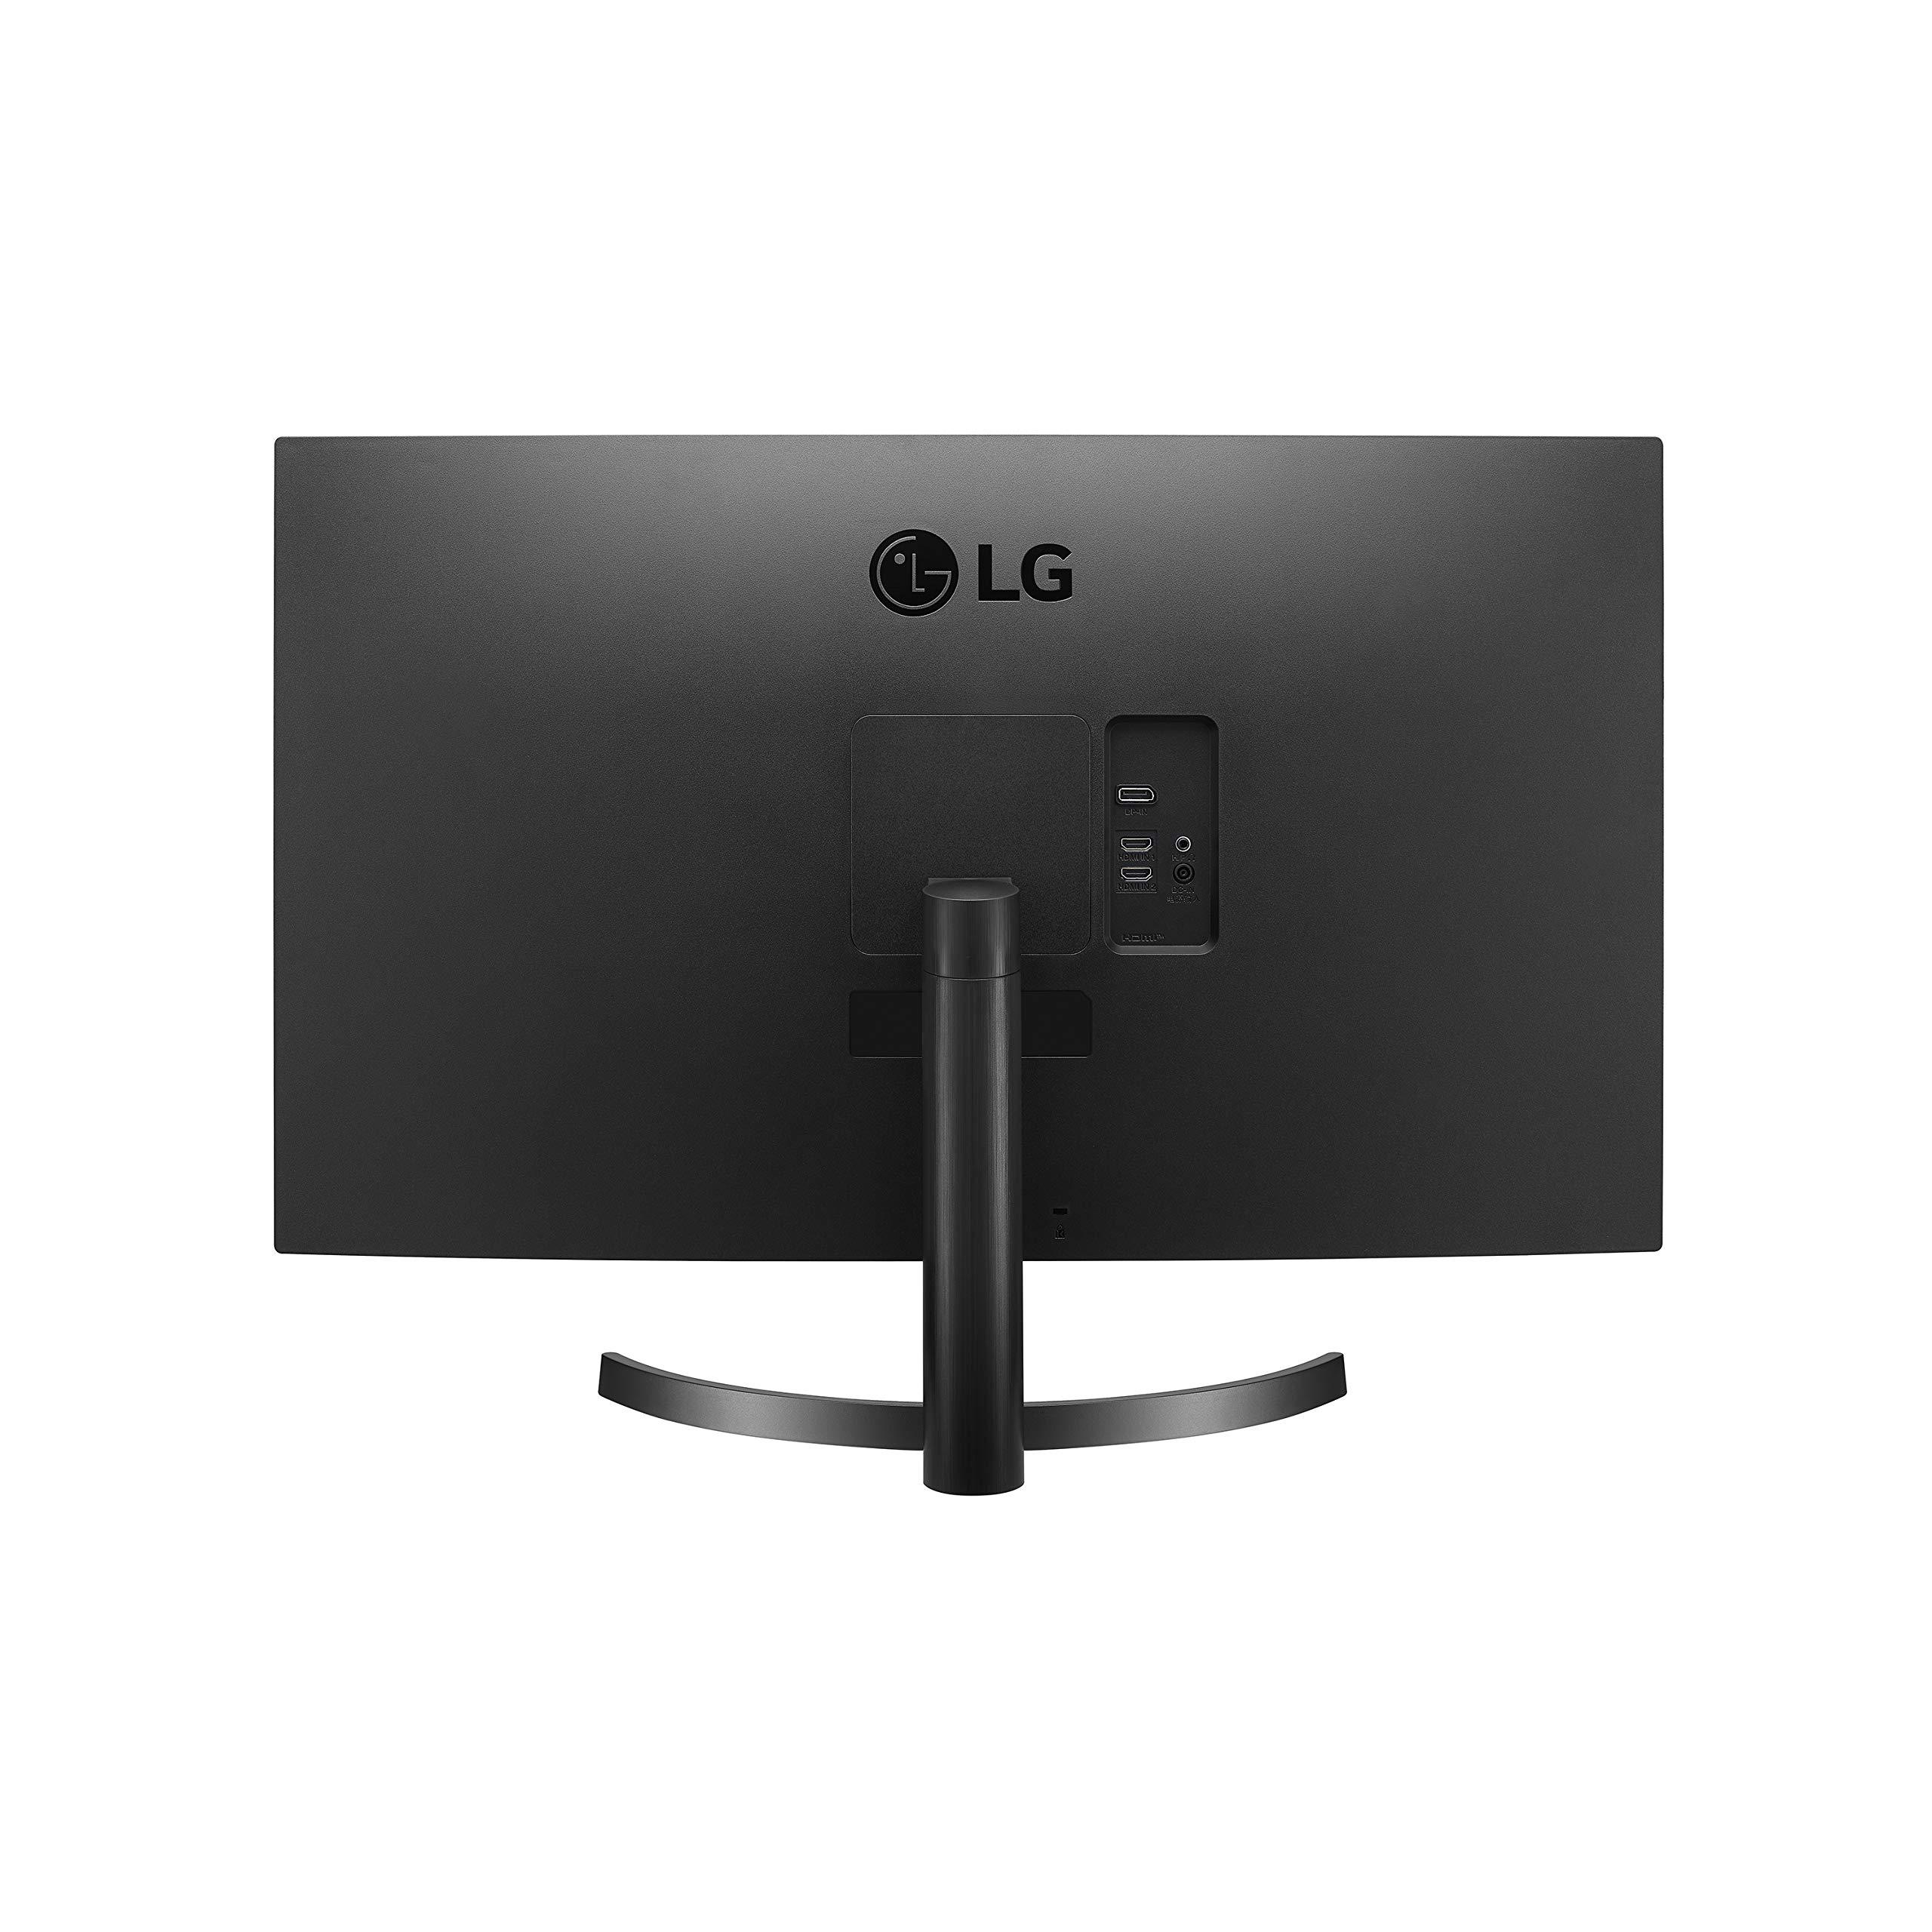 LG 27QN600-B 27” QHD (2560 x 1440) IPS Display with FreeSync, sRGB 99% Color Gamut, HDR10 with a 3-Side Virtually Borderless Design, Black